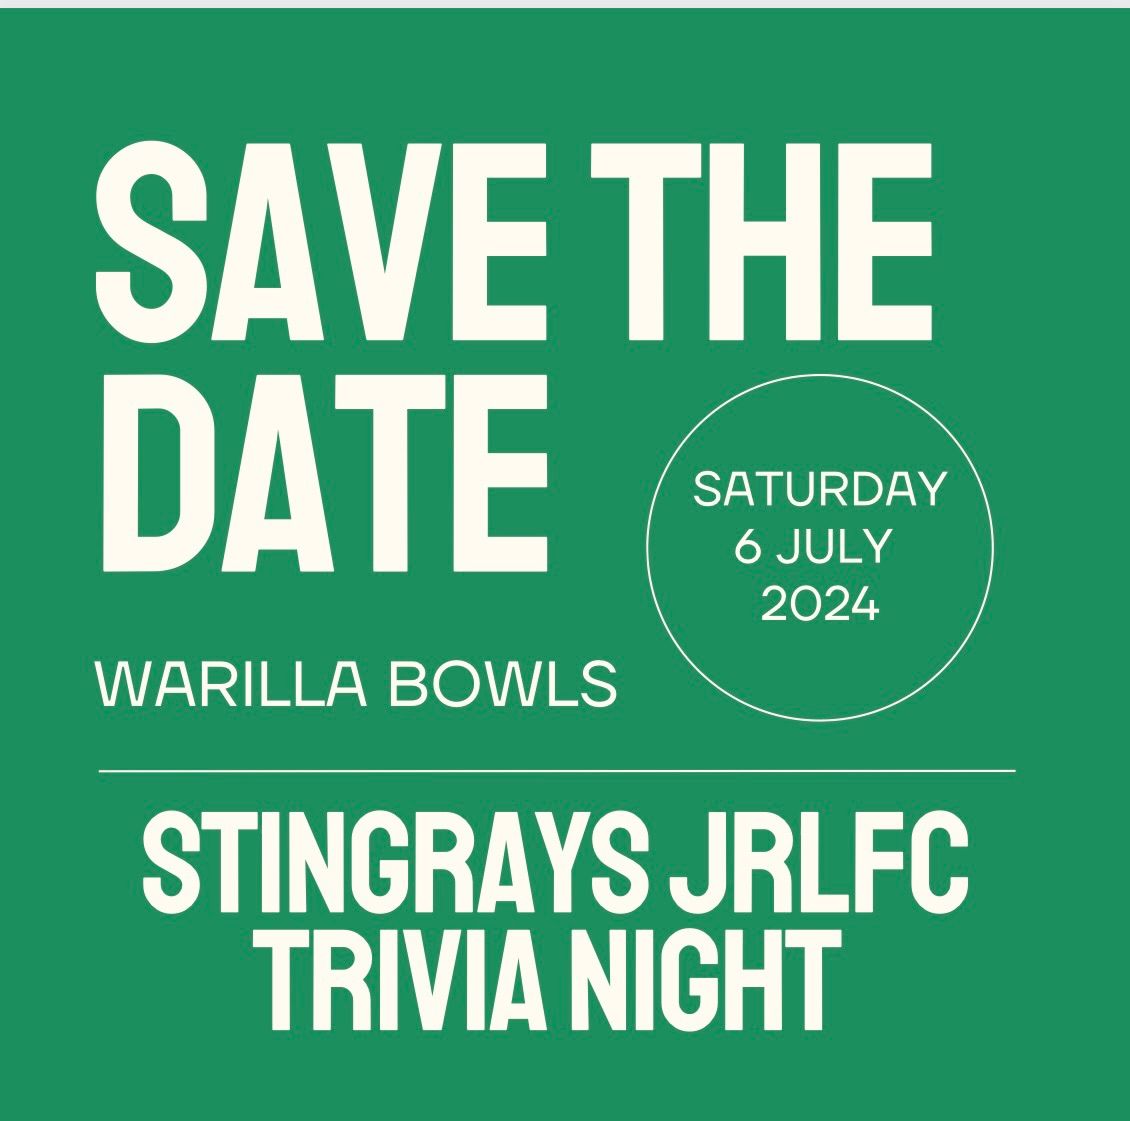 Stingrays JRLFC Trivia Night 